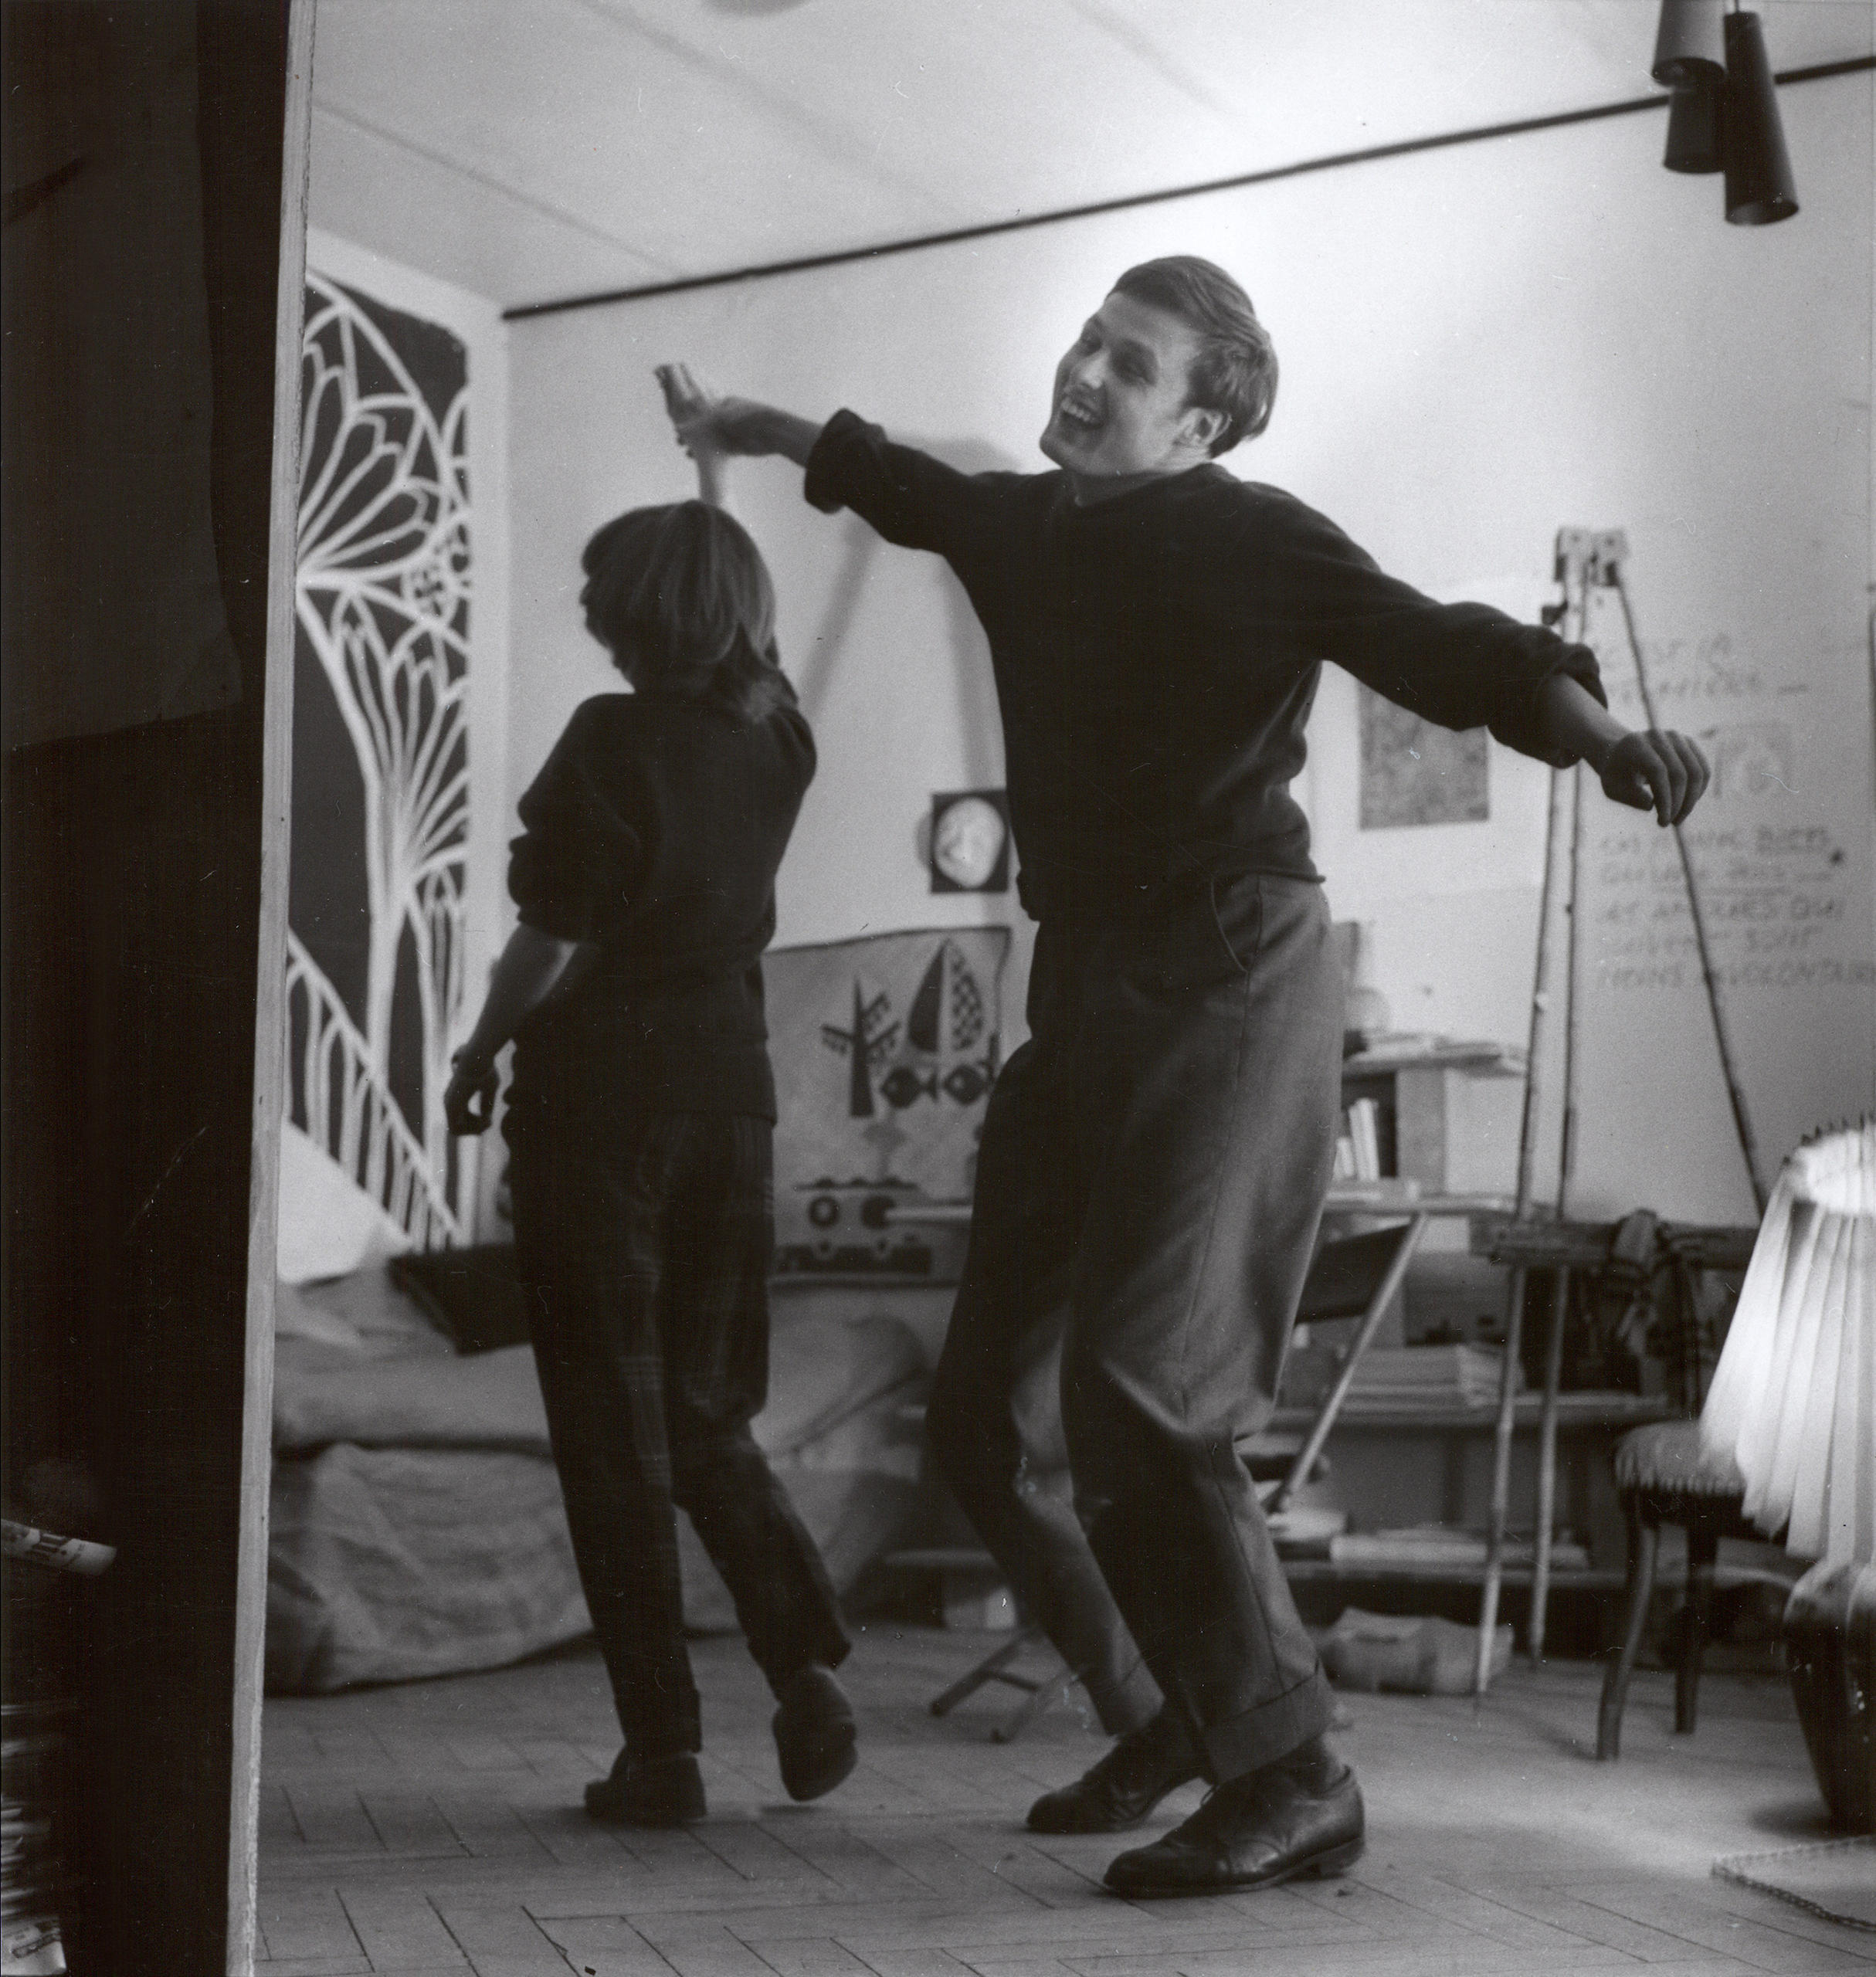 Kurt Blum and Harald Szeemann dancing